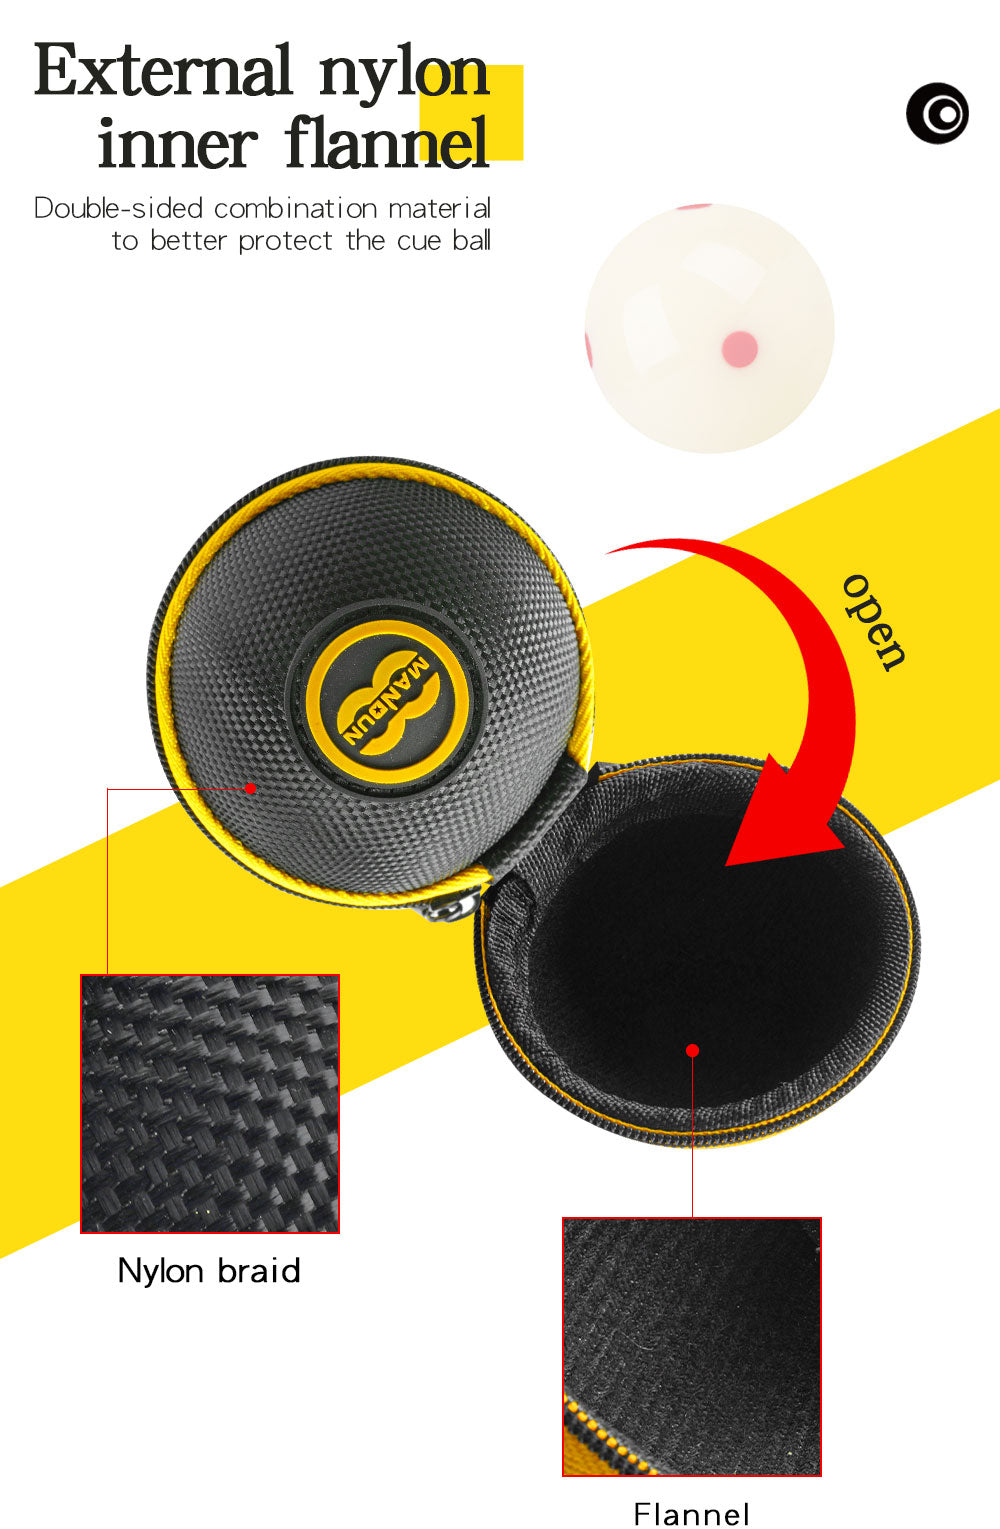 MANDUN Clip-on Cue Ball Case Nylon Fleece Material Premium Billiard Balls Holder Cue Balls Bag Pool Training Balls Case